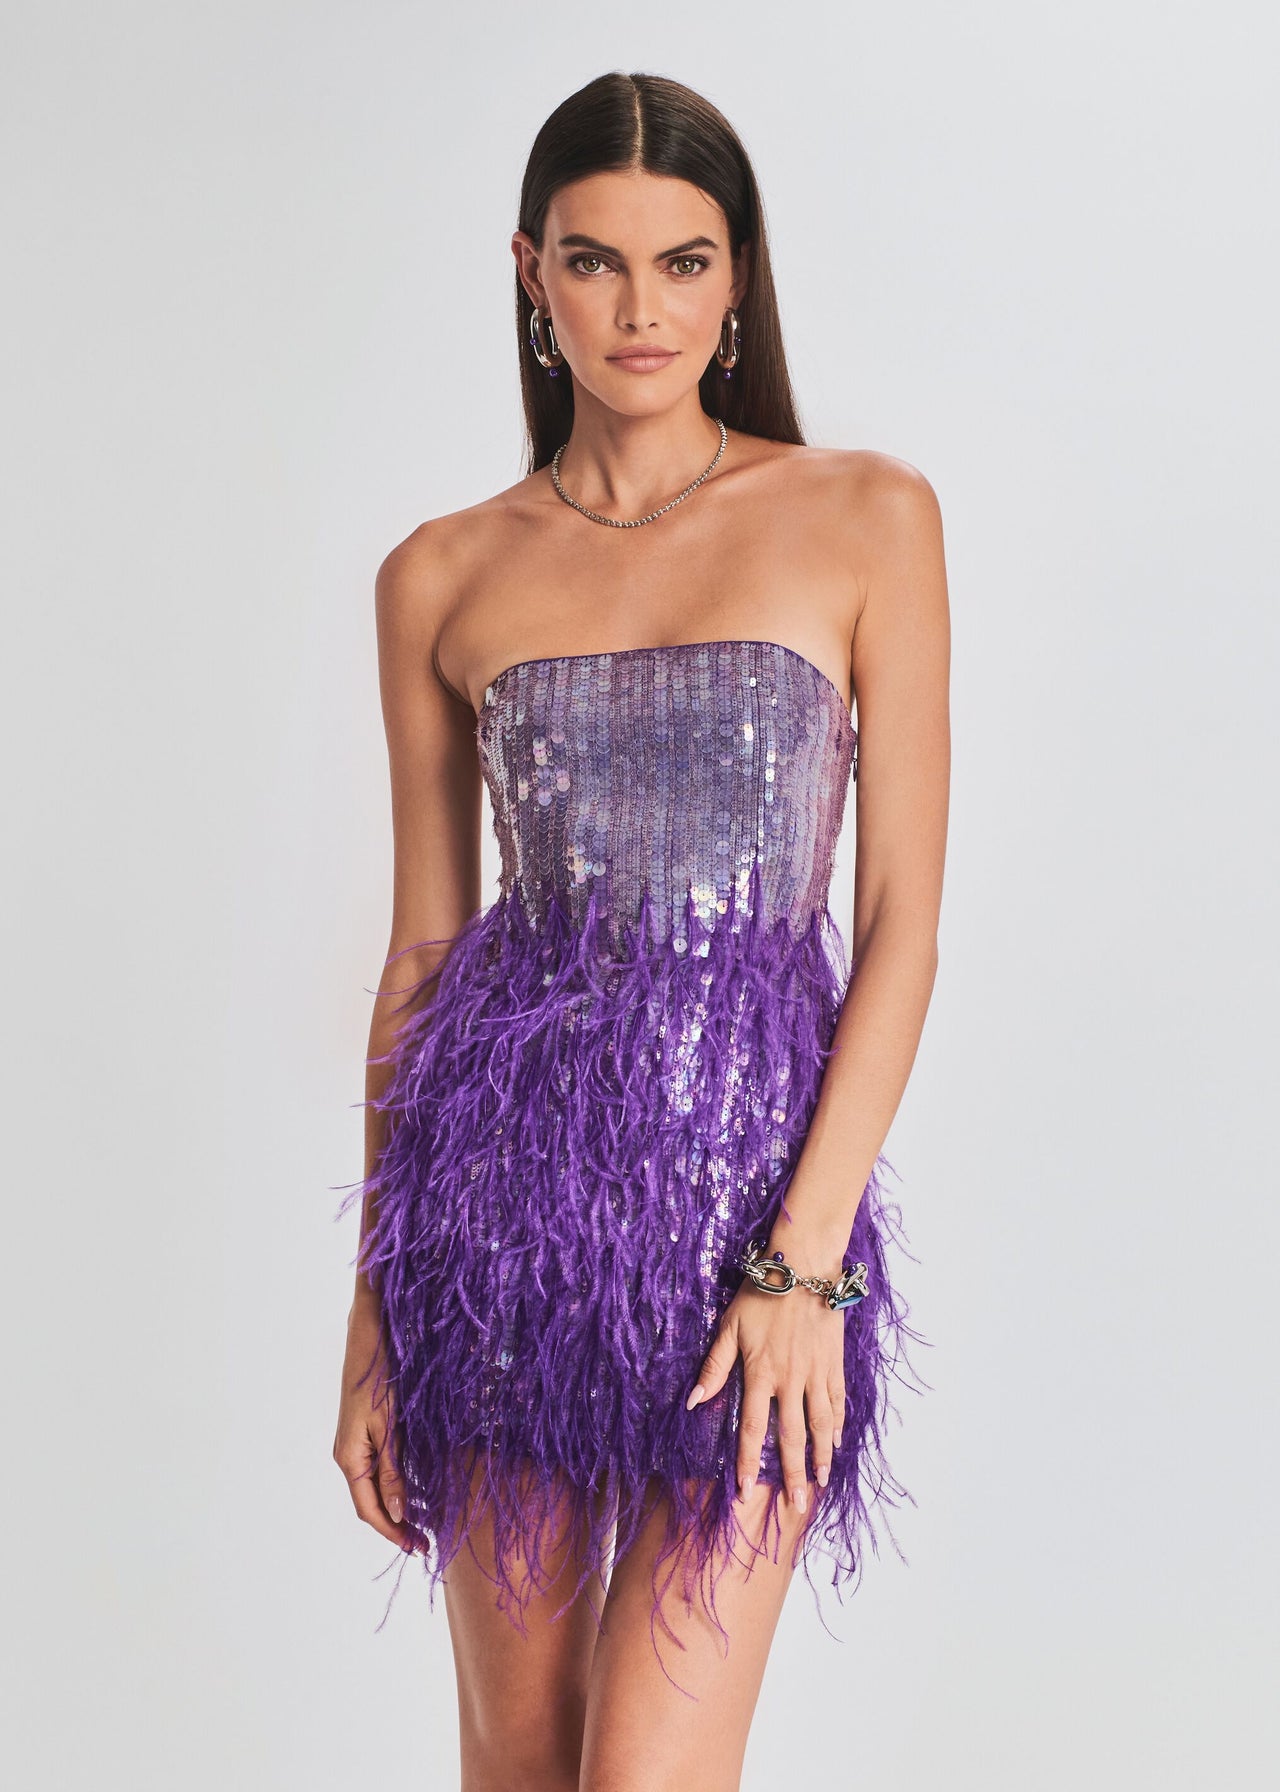 Anastasia Sequin Feather Dress